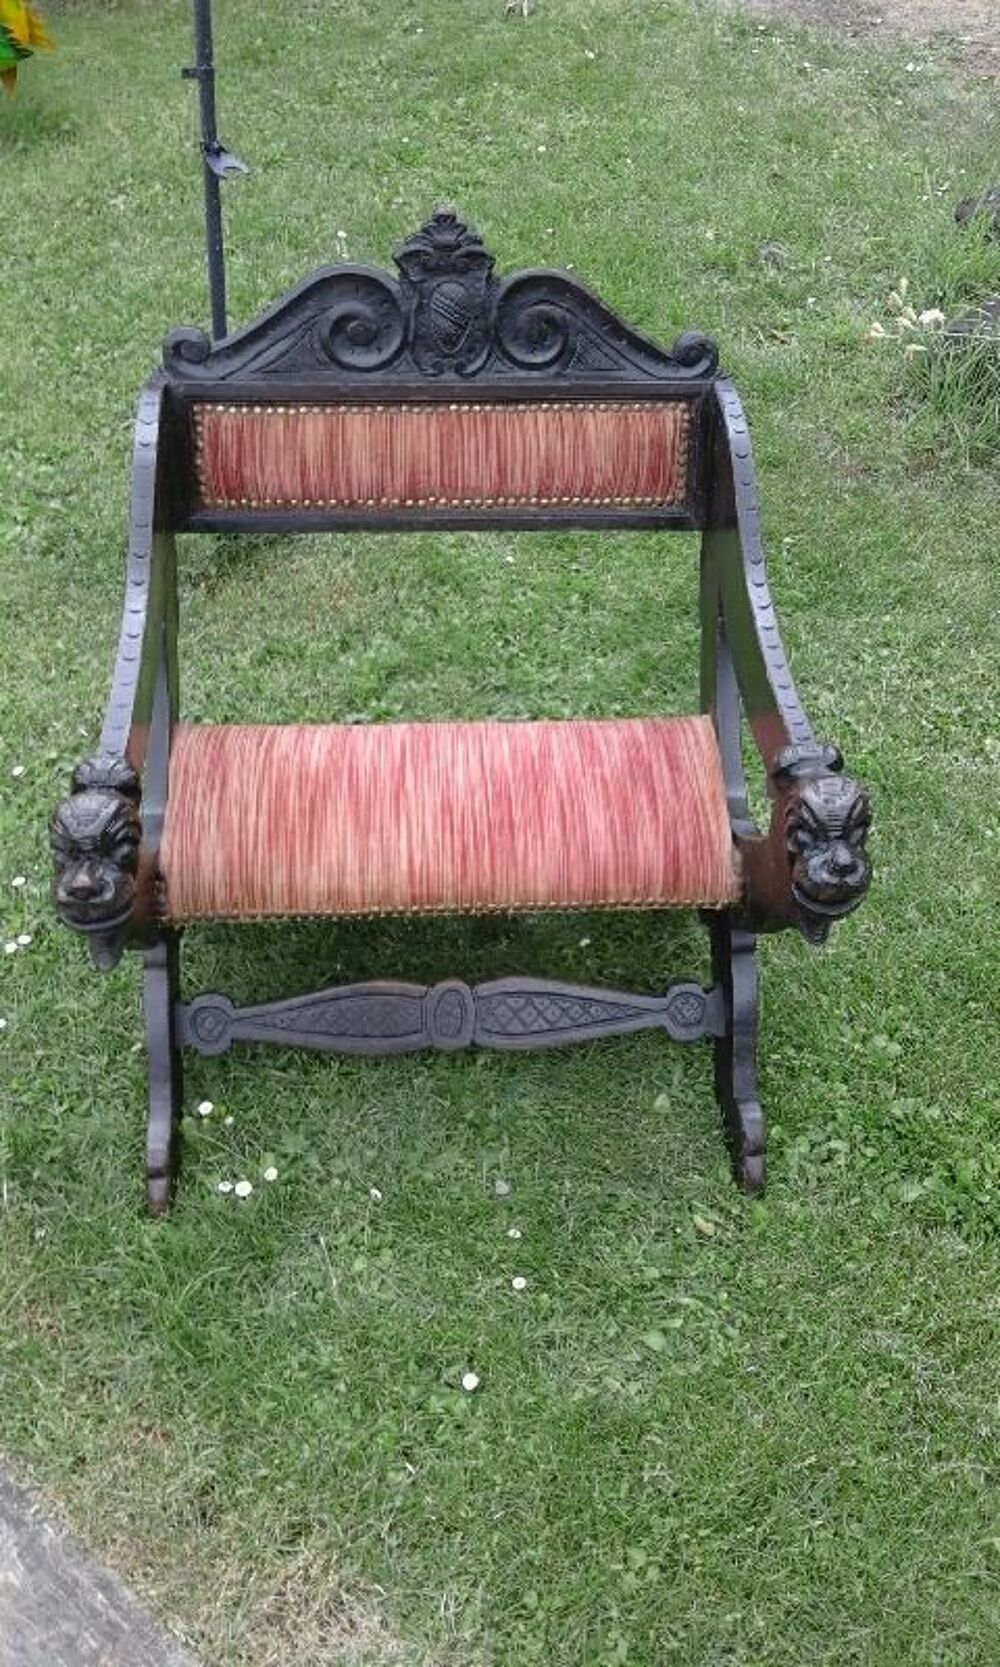 fauteuil bas en bois style Dagobert
Meubles